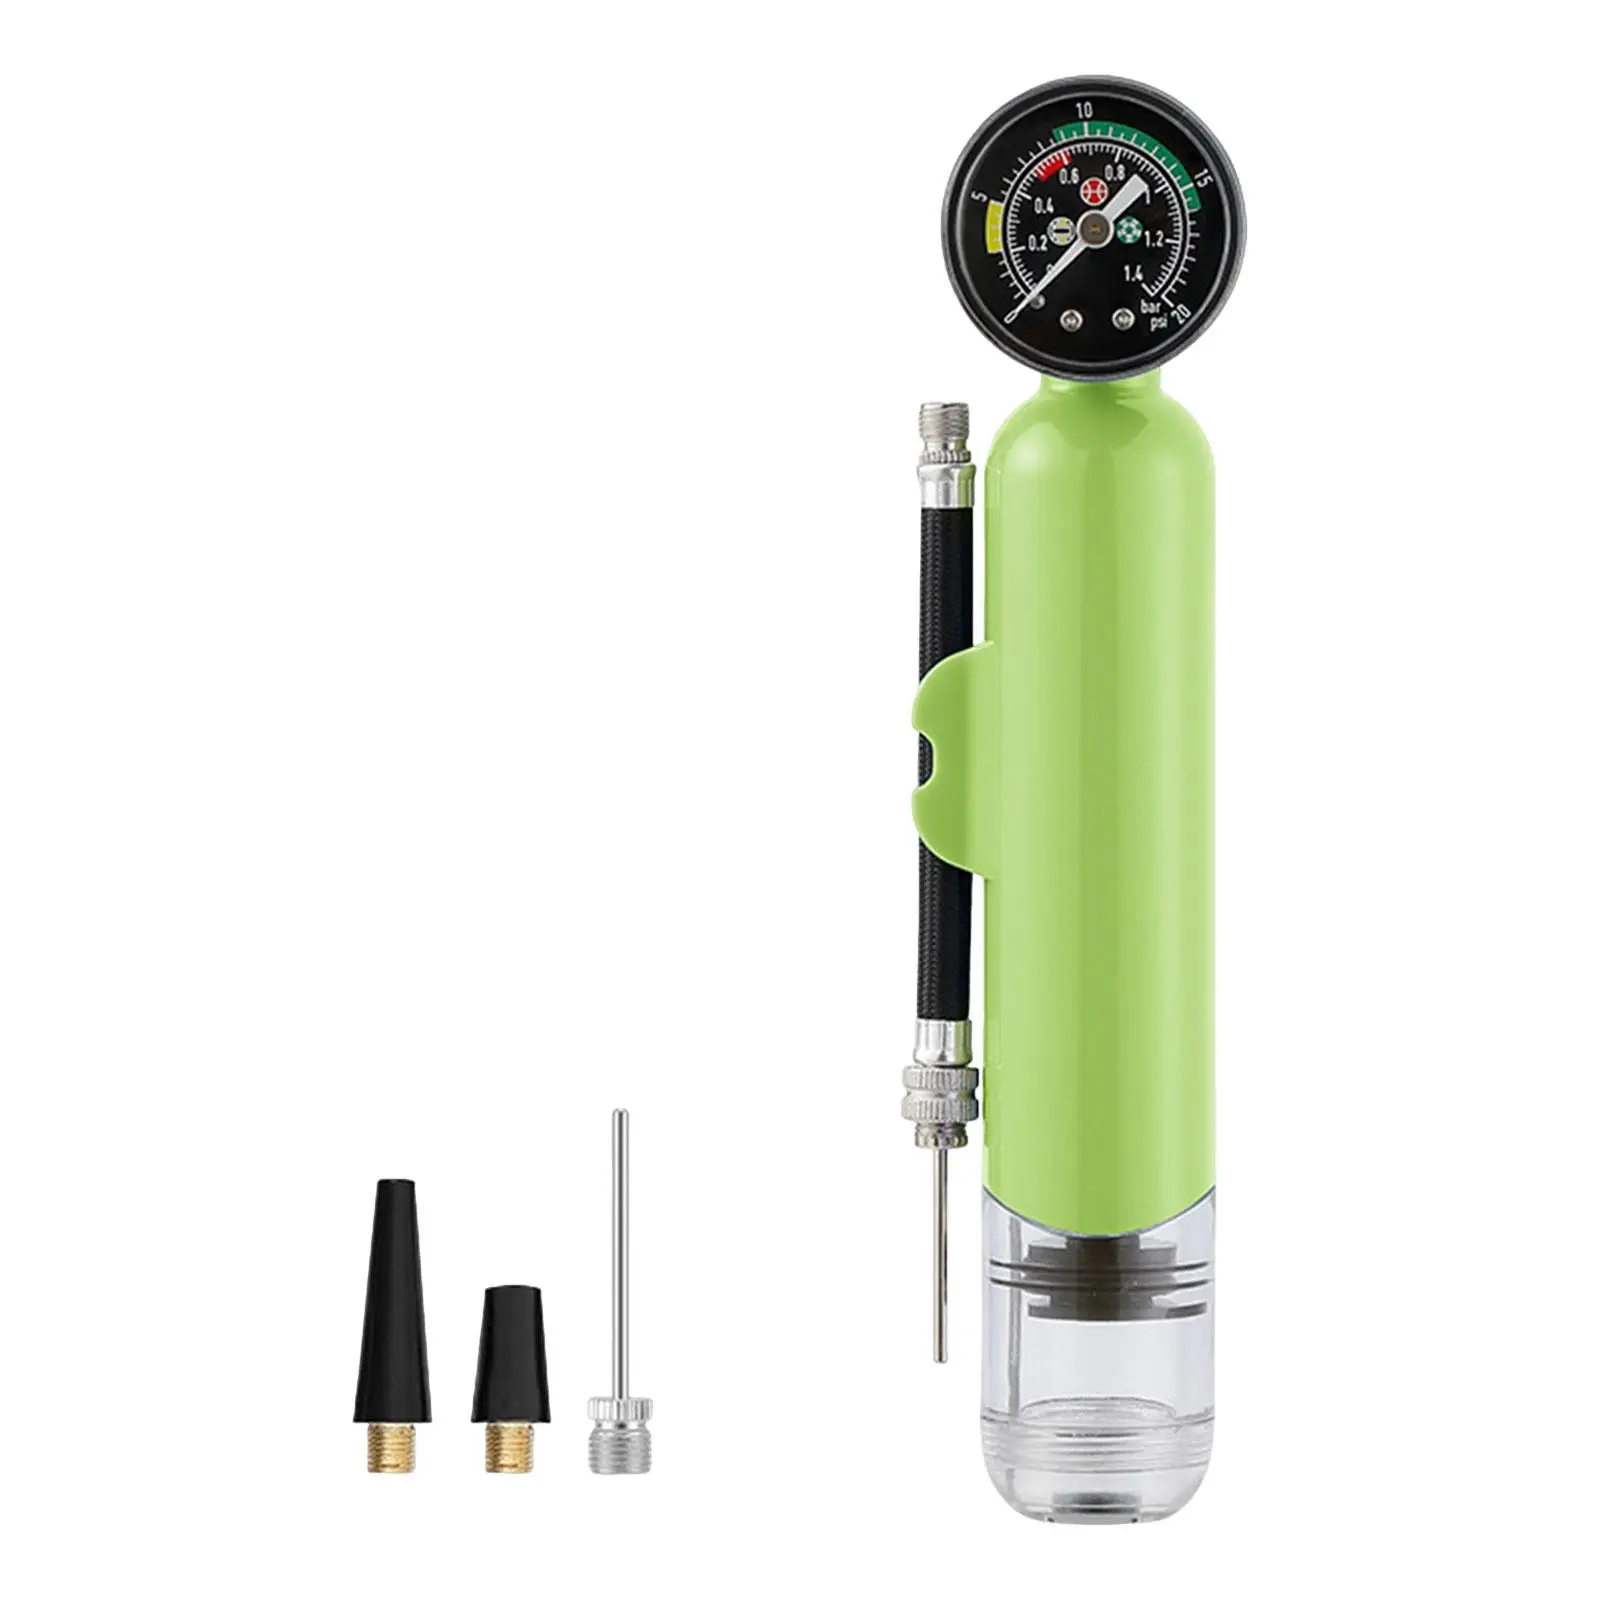 Ball Pump with Pressure Gauge, Basketball Pump, Sports Accessories, Volleyball Pump ,Portable Hand Air Pump